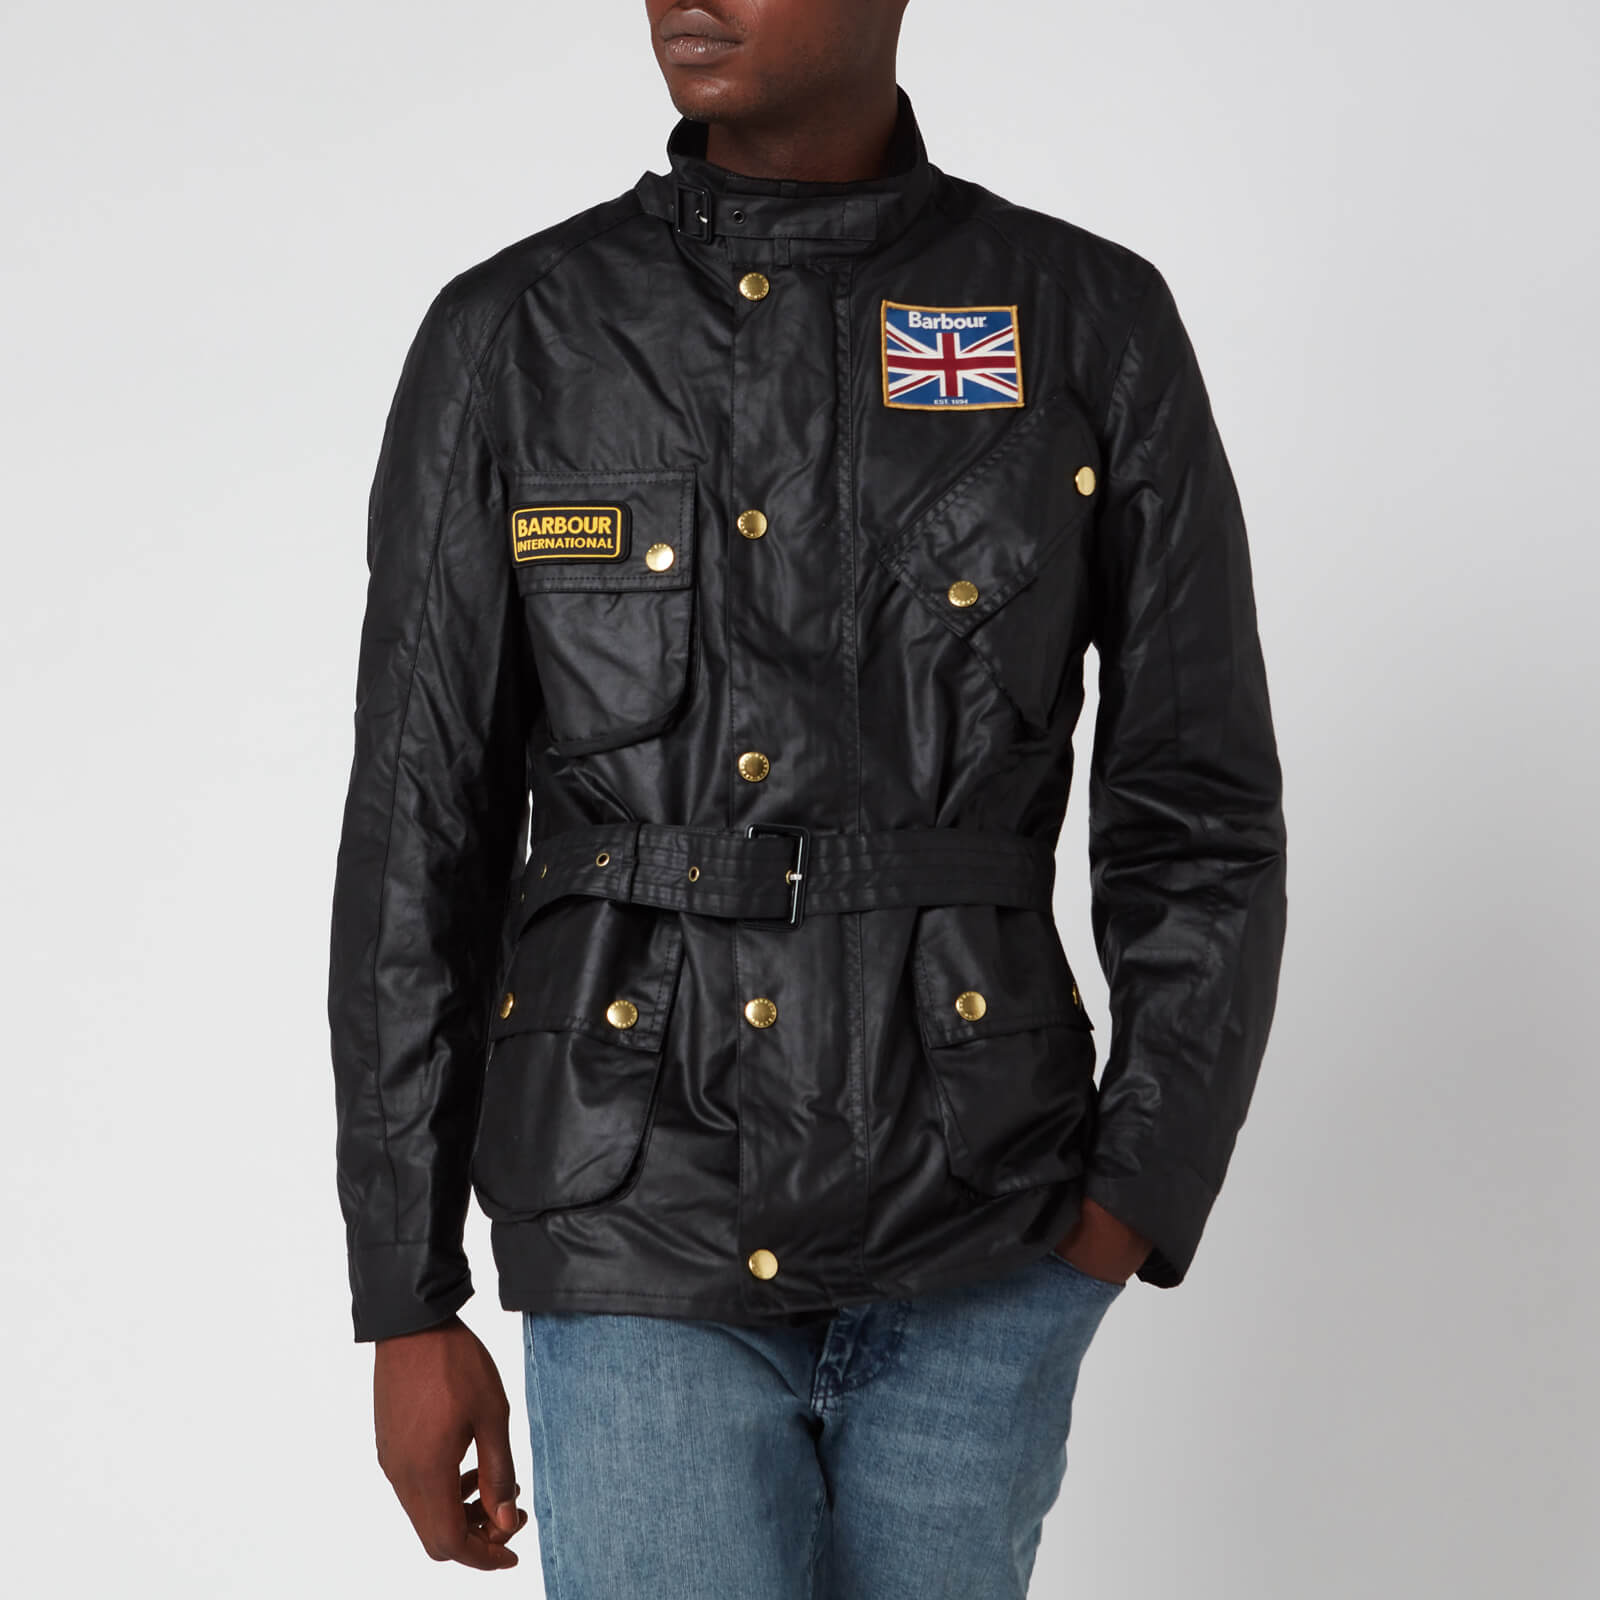 barbour limited edition union jack jacket